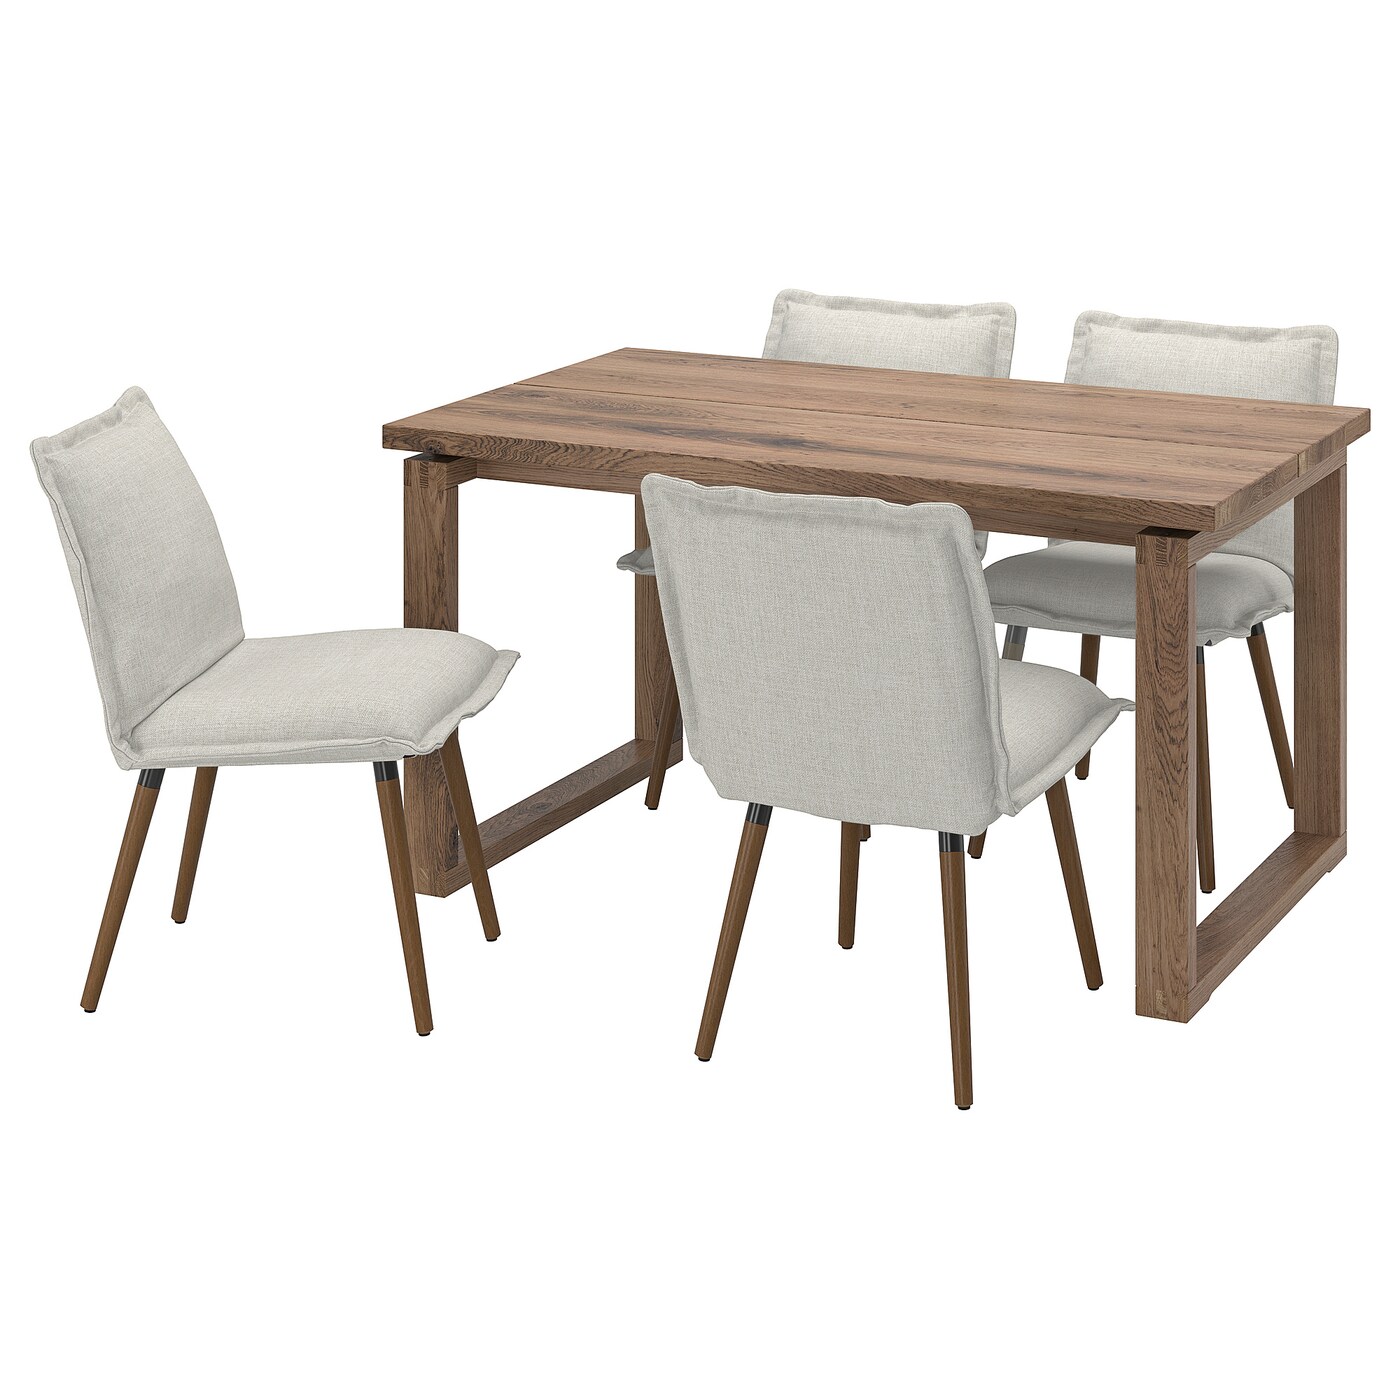 Стол и 4 стула - MÖRBYLÅNGA / KLINTEN/ MОRBYLАNGA IKEA/  МЁРБИЛОНГА / КЛИНТЕН ИКЕА,  140х85  см,  коричневый/ серый